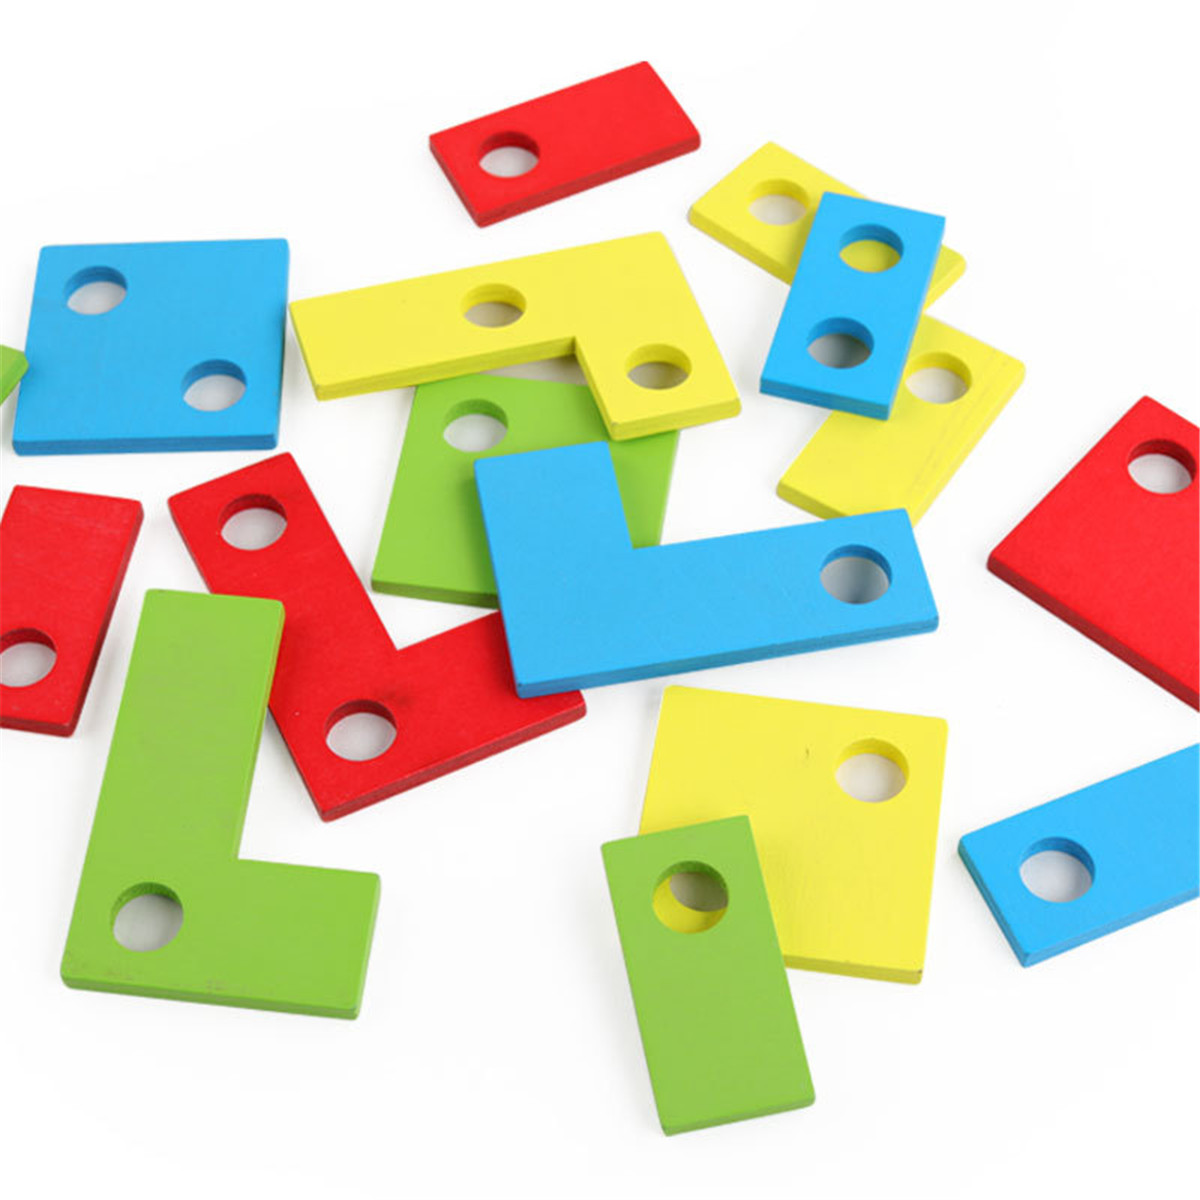 Tetris-Brain-3D-Puzzle-Blocks-Early-Educational-Intelligence-Development-Toys-for-Childrens-Gift-1688419-11